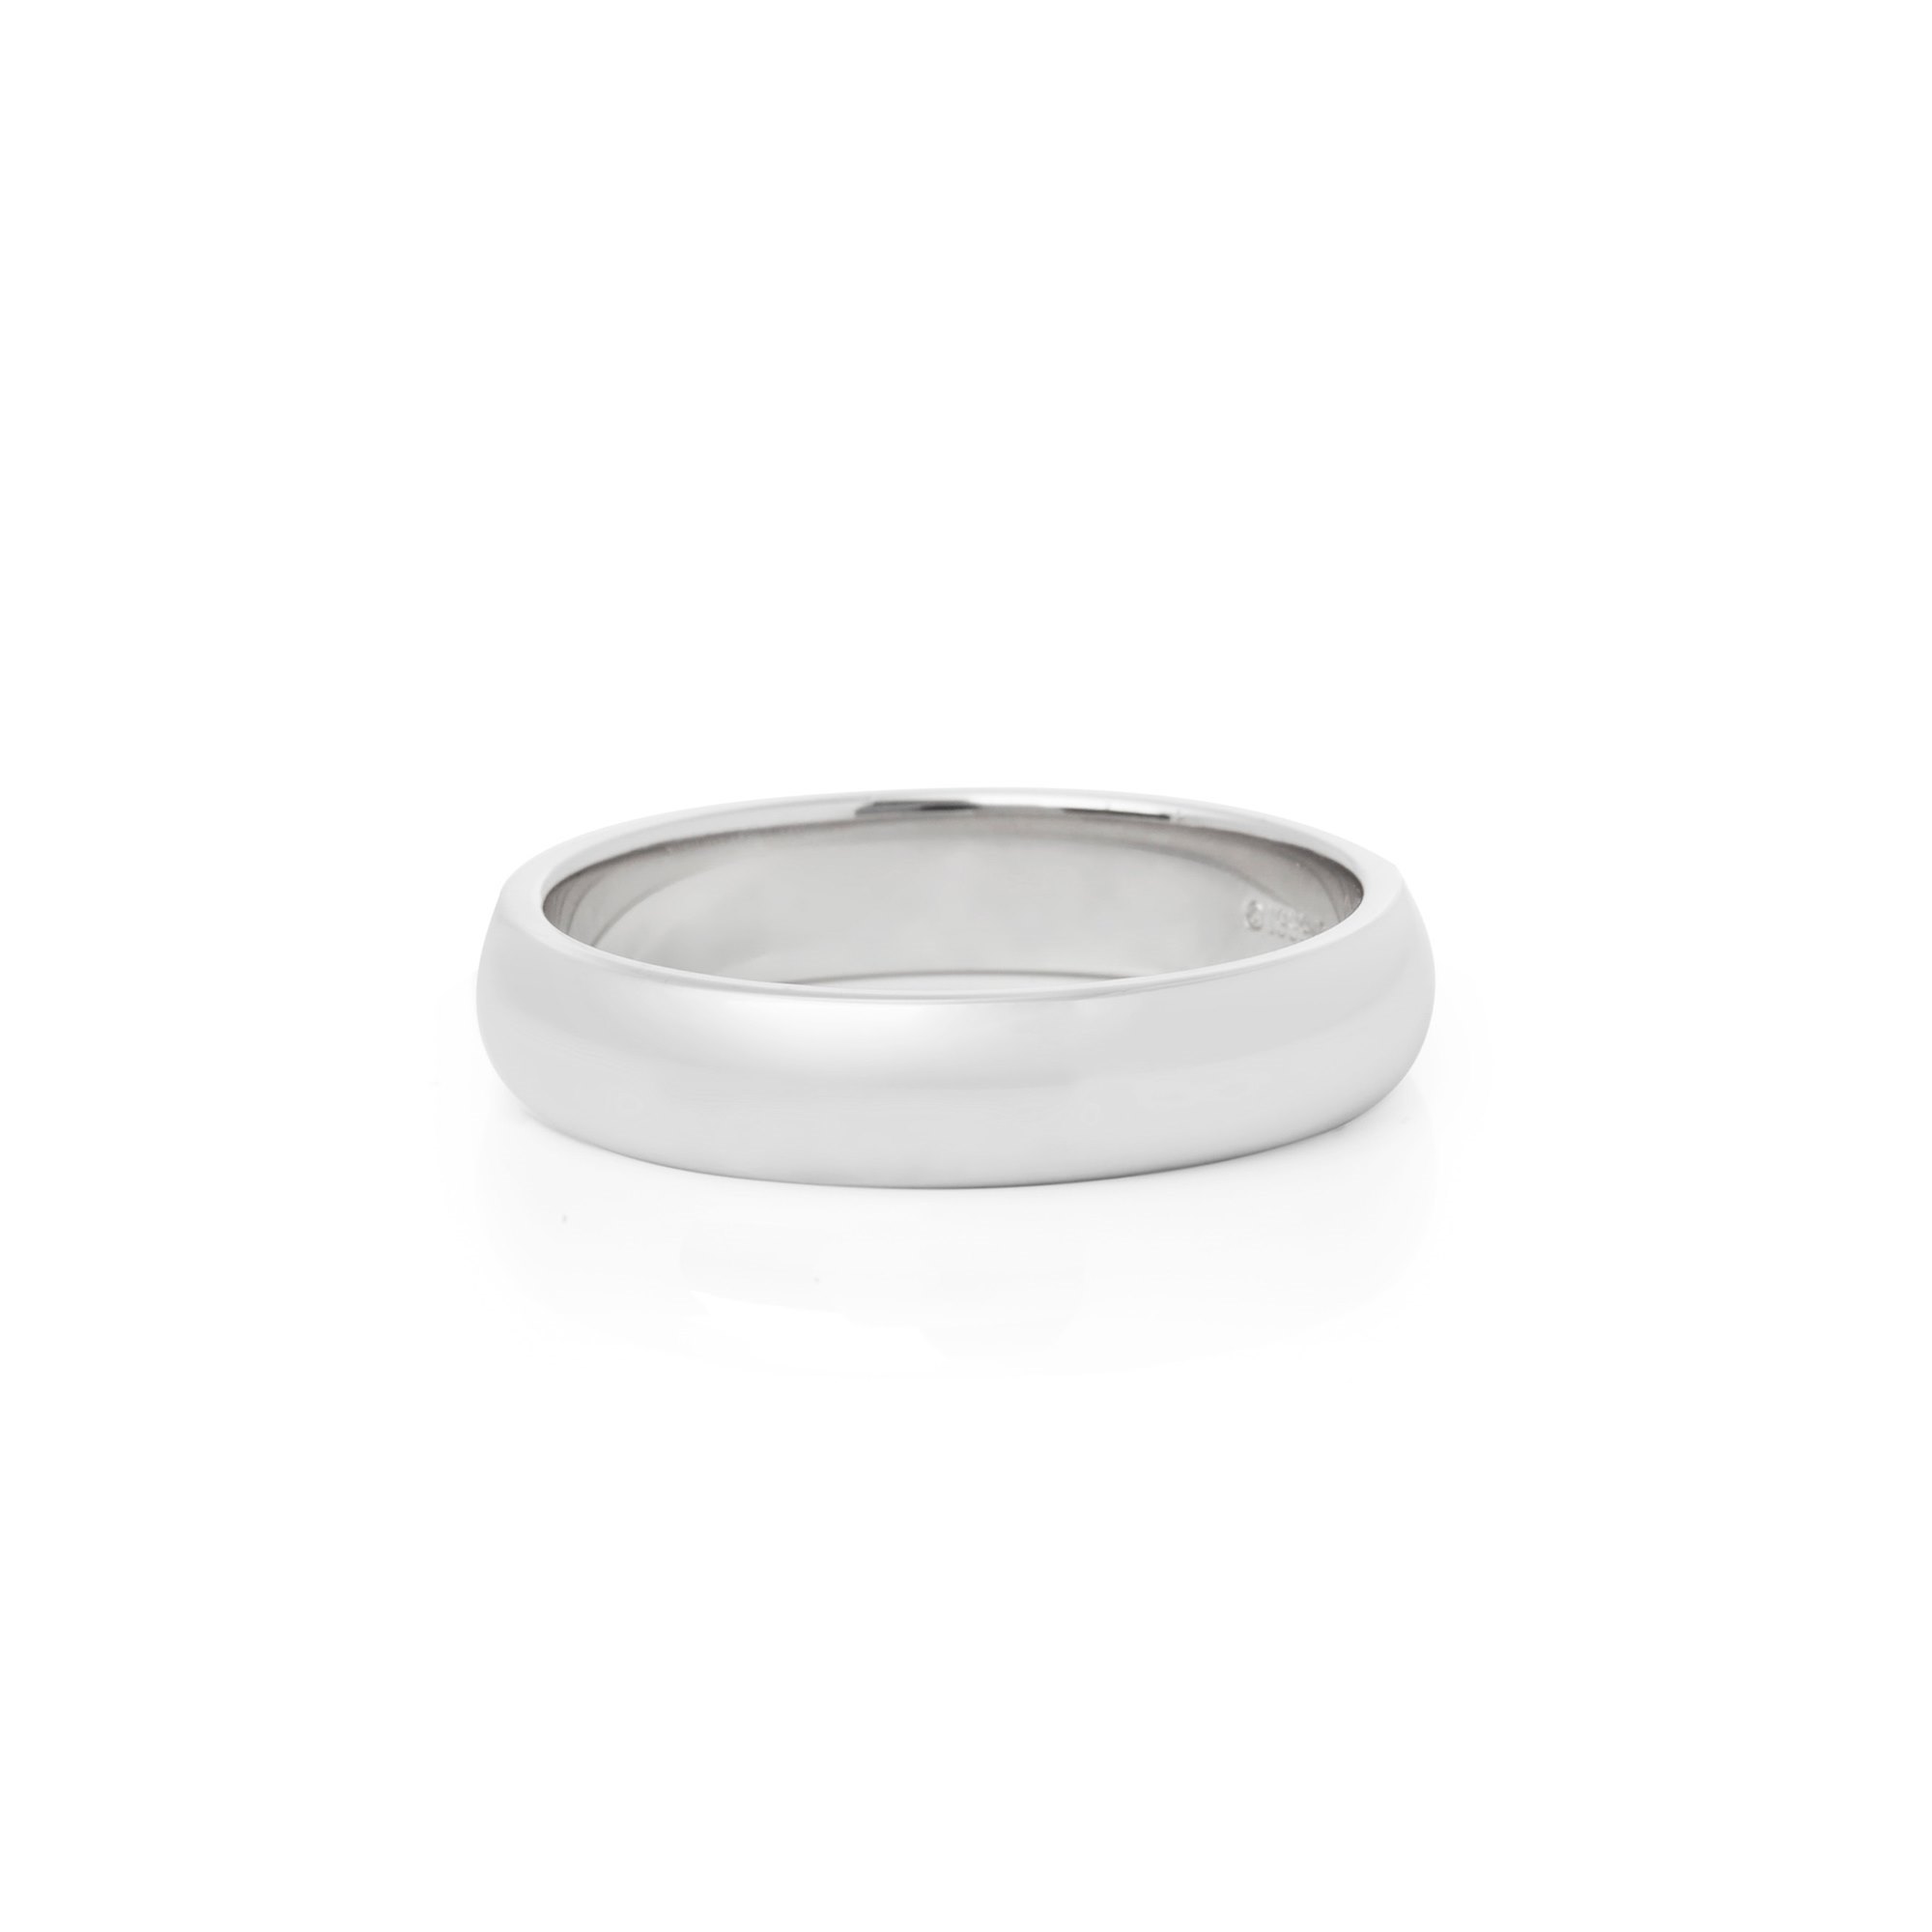 Tiffany & Co. Platinum 4.5mm Court Wedding Ring